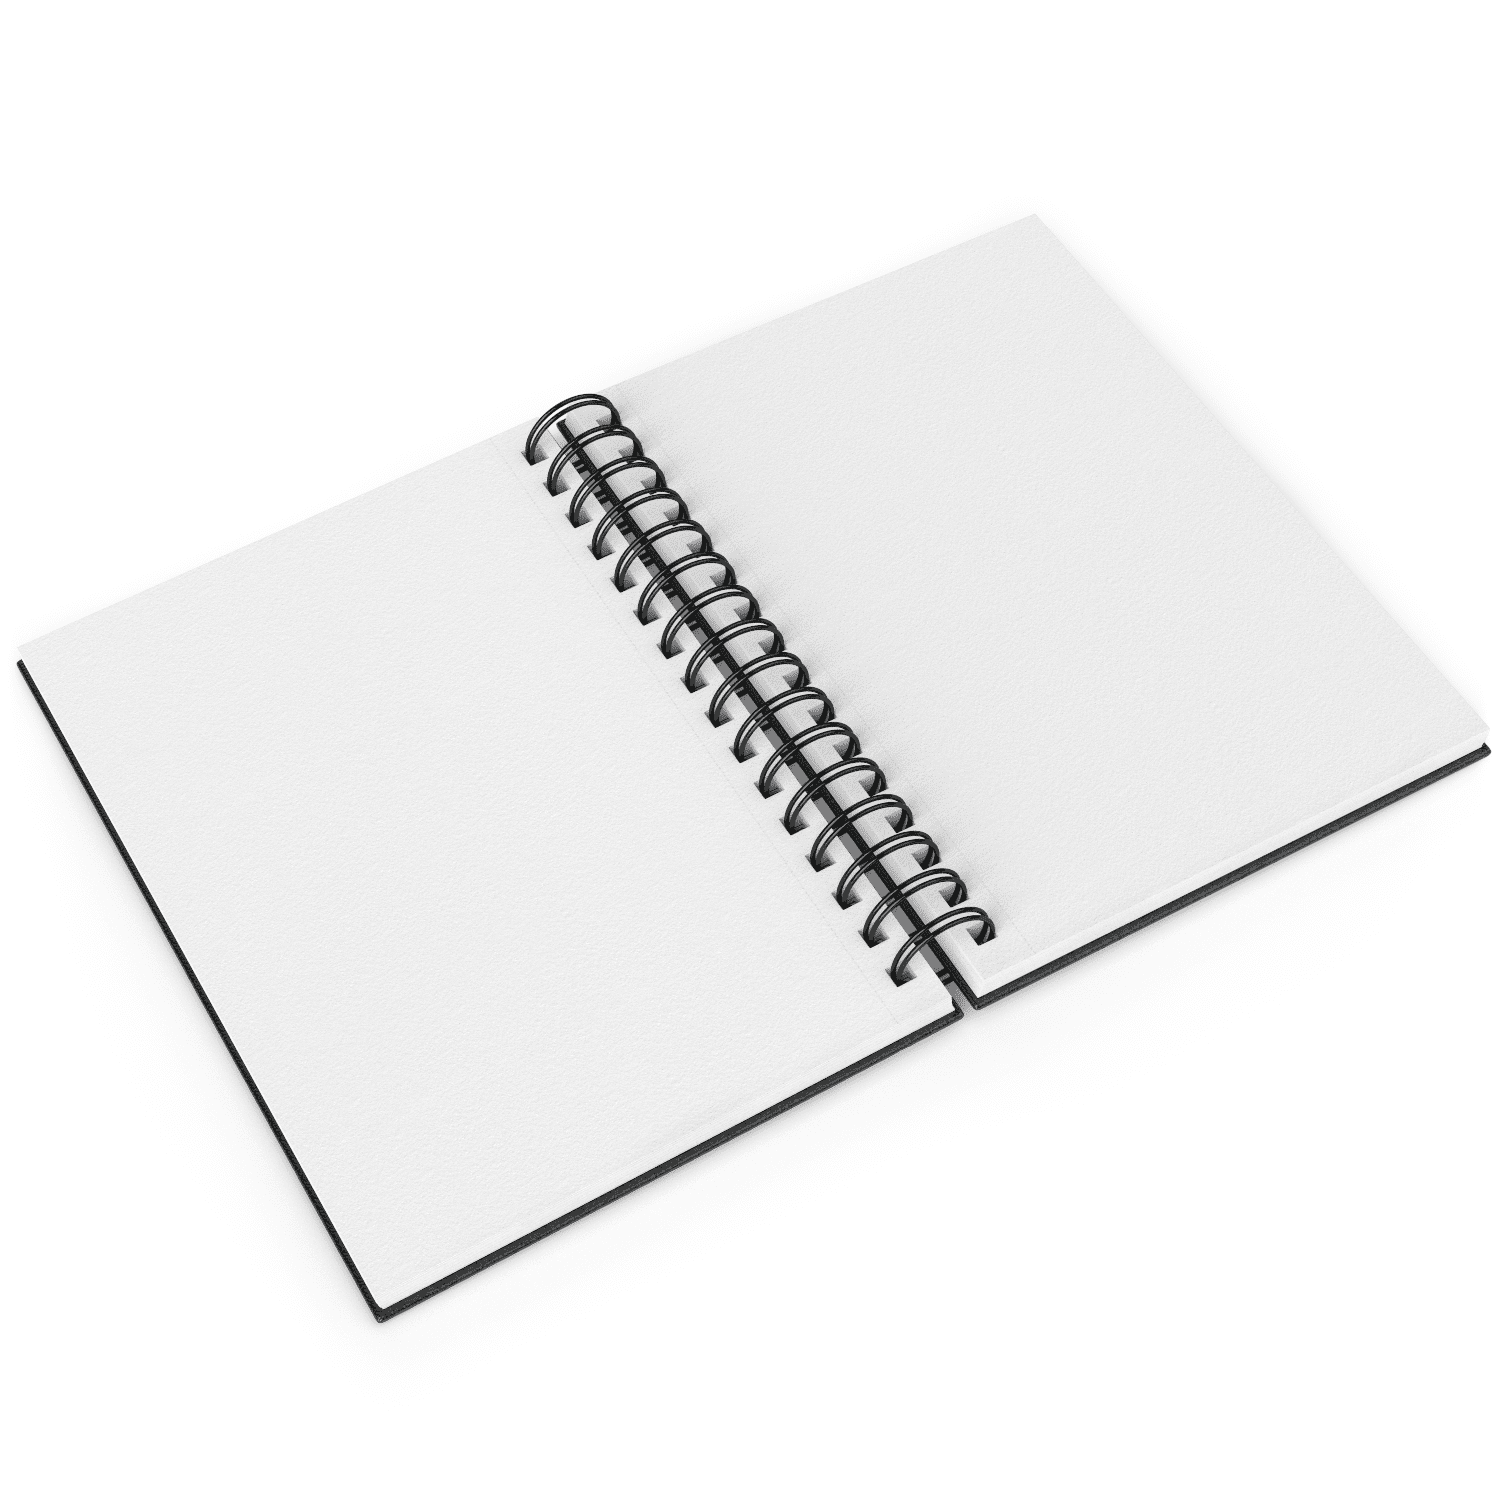 8k Kraft Paper Sketchbook Spiral Art Notebook Blank Sheets 160GSM HardCover  School Supplies Pencil drawing notepad